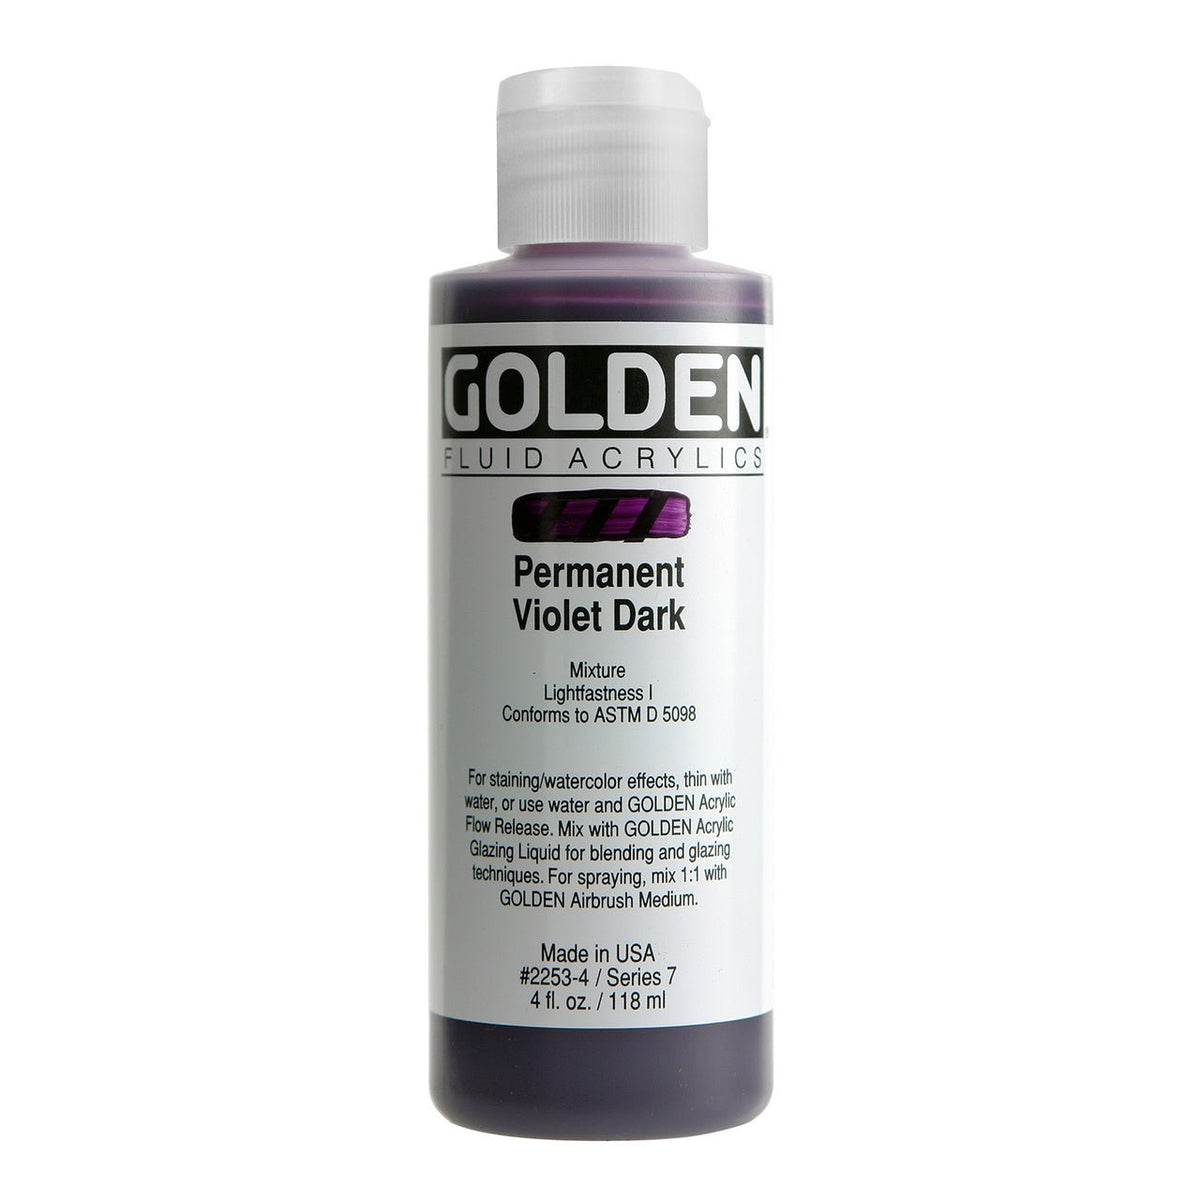 Golden Fluid Acrylic Permanent Violet Dark 4 oz - merriartist.com